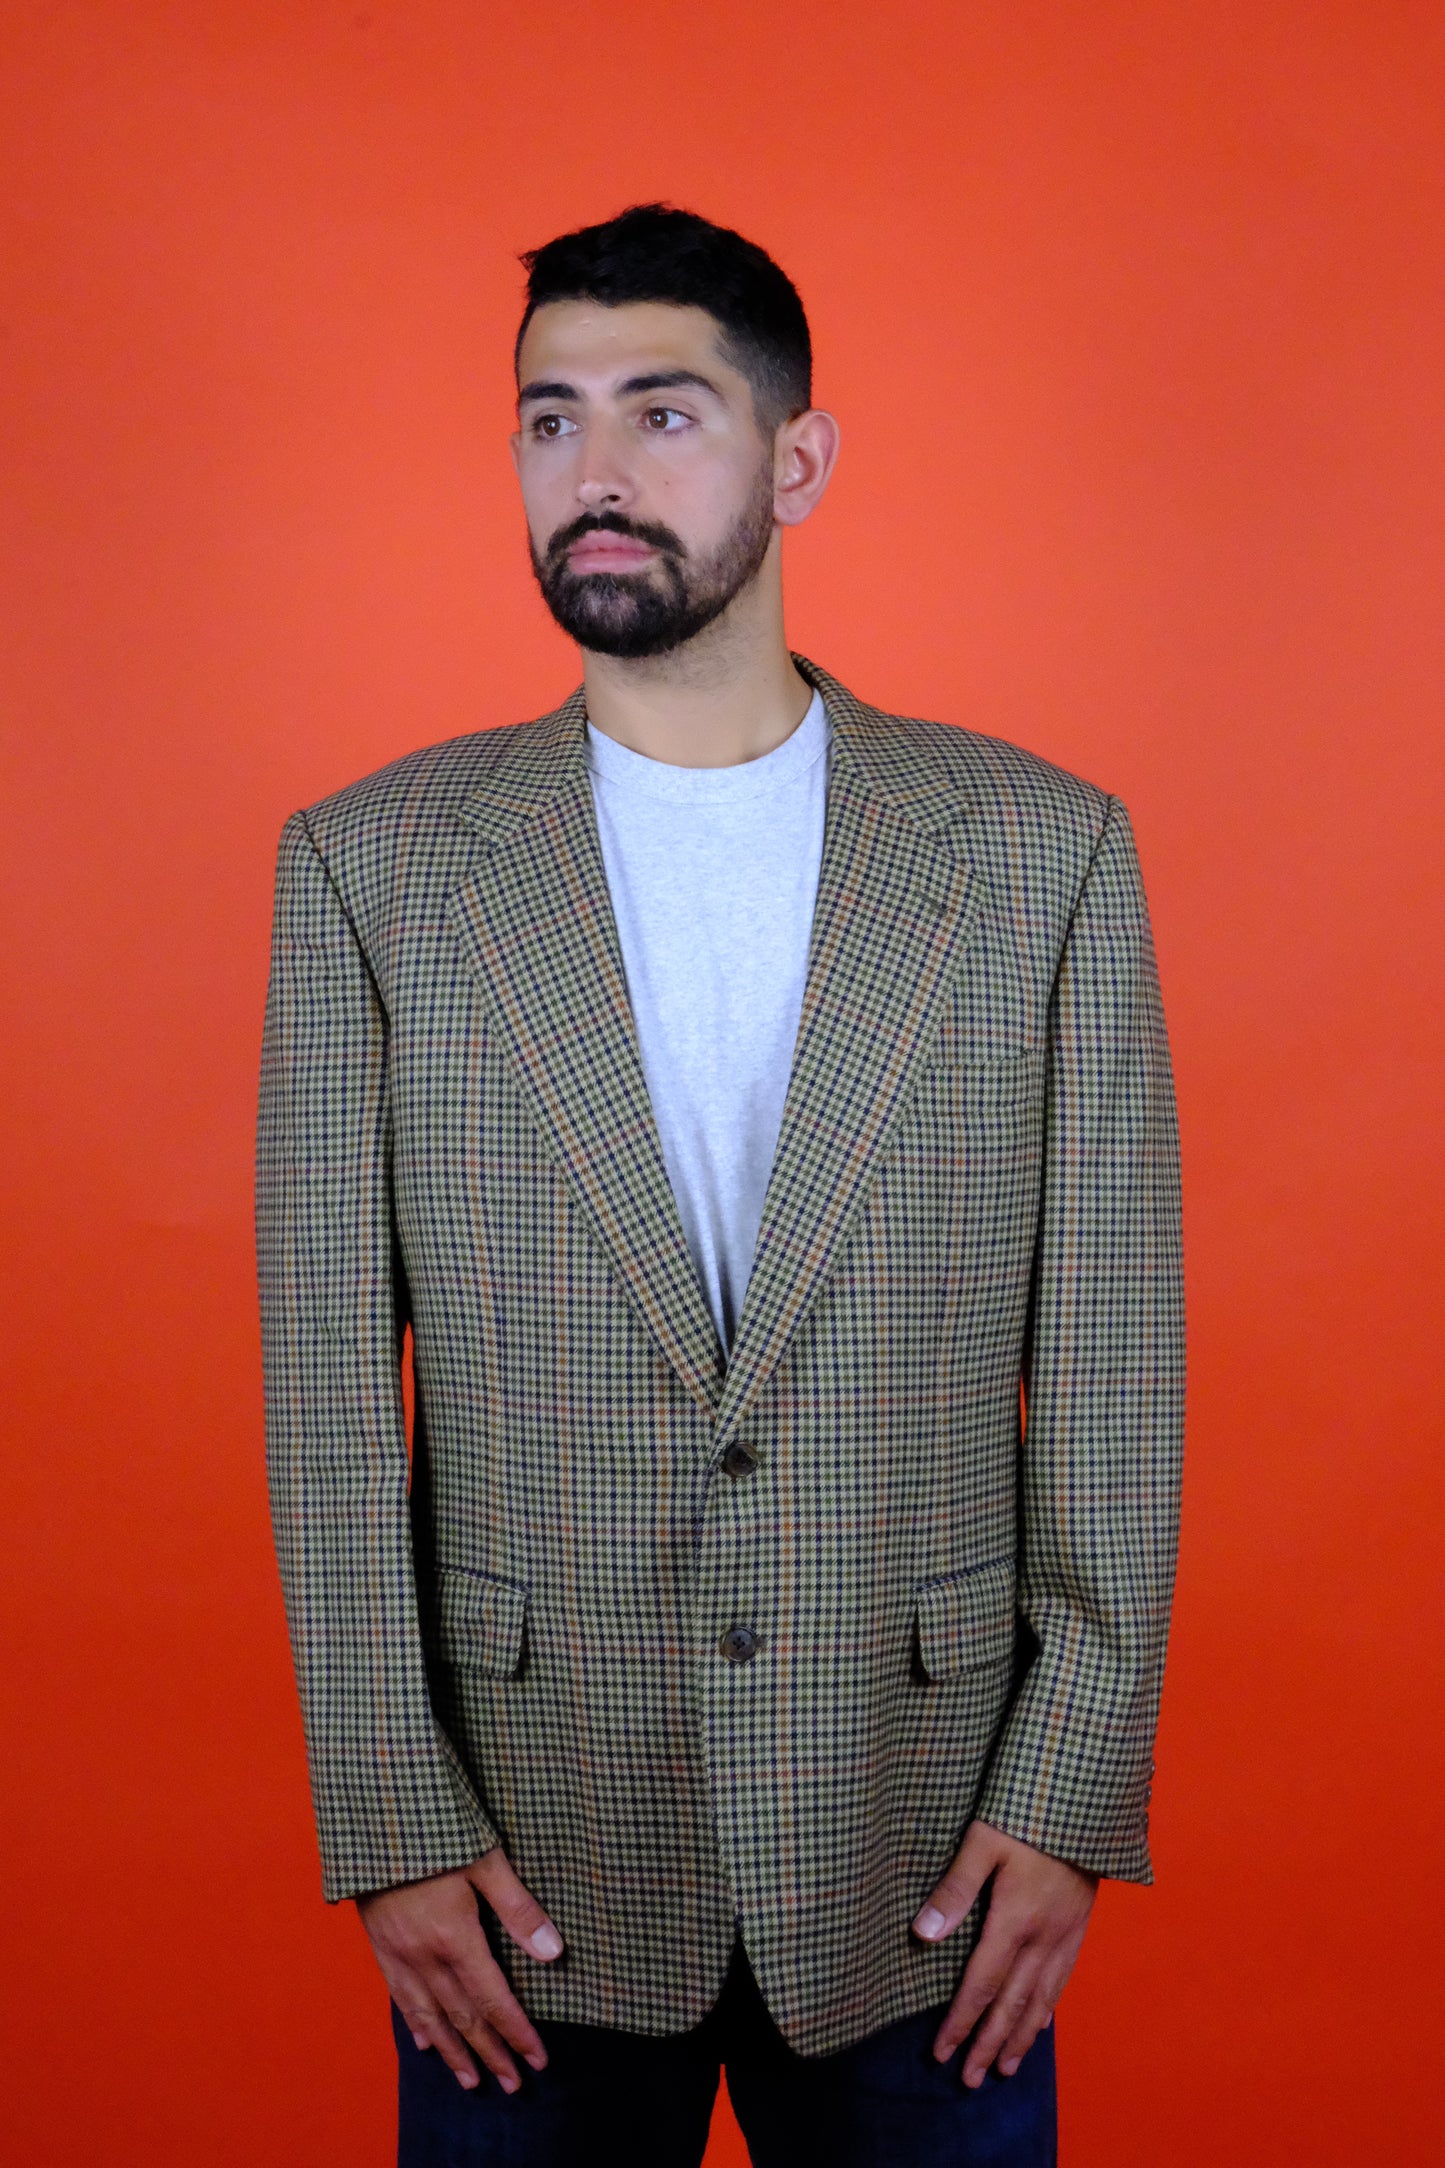 Burberrys' Wool Blend Suit Jacket - vintage clothing clochard92.com